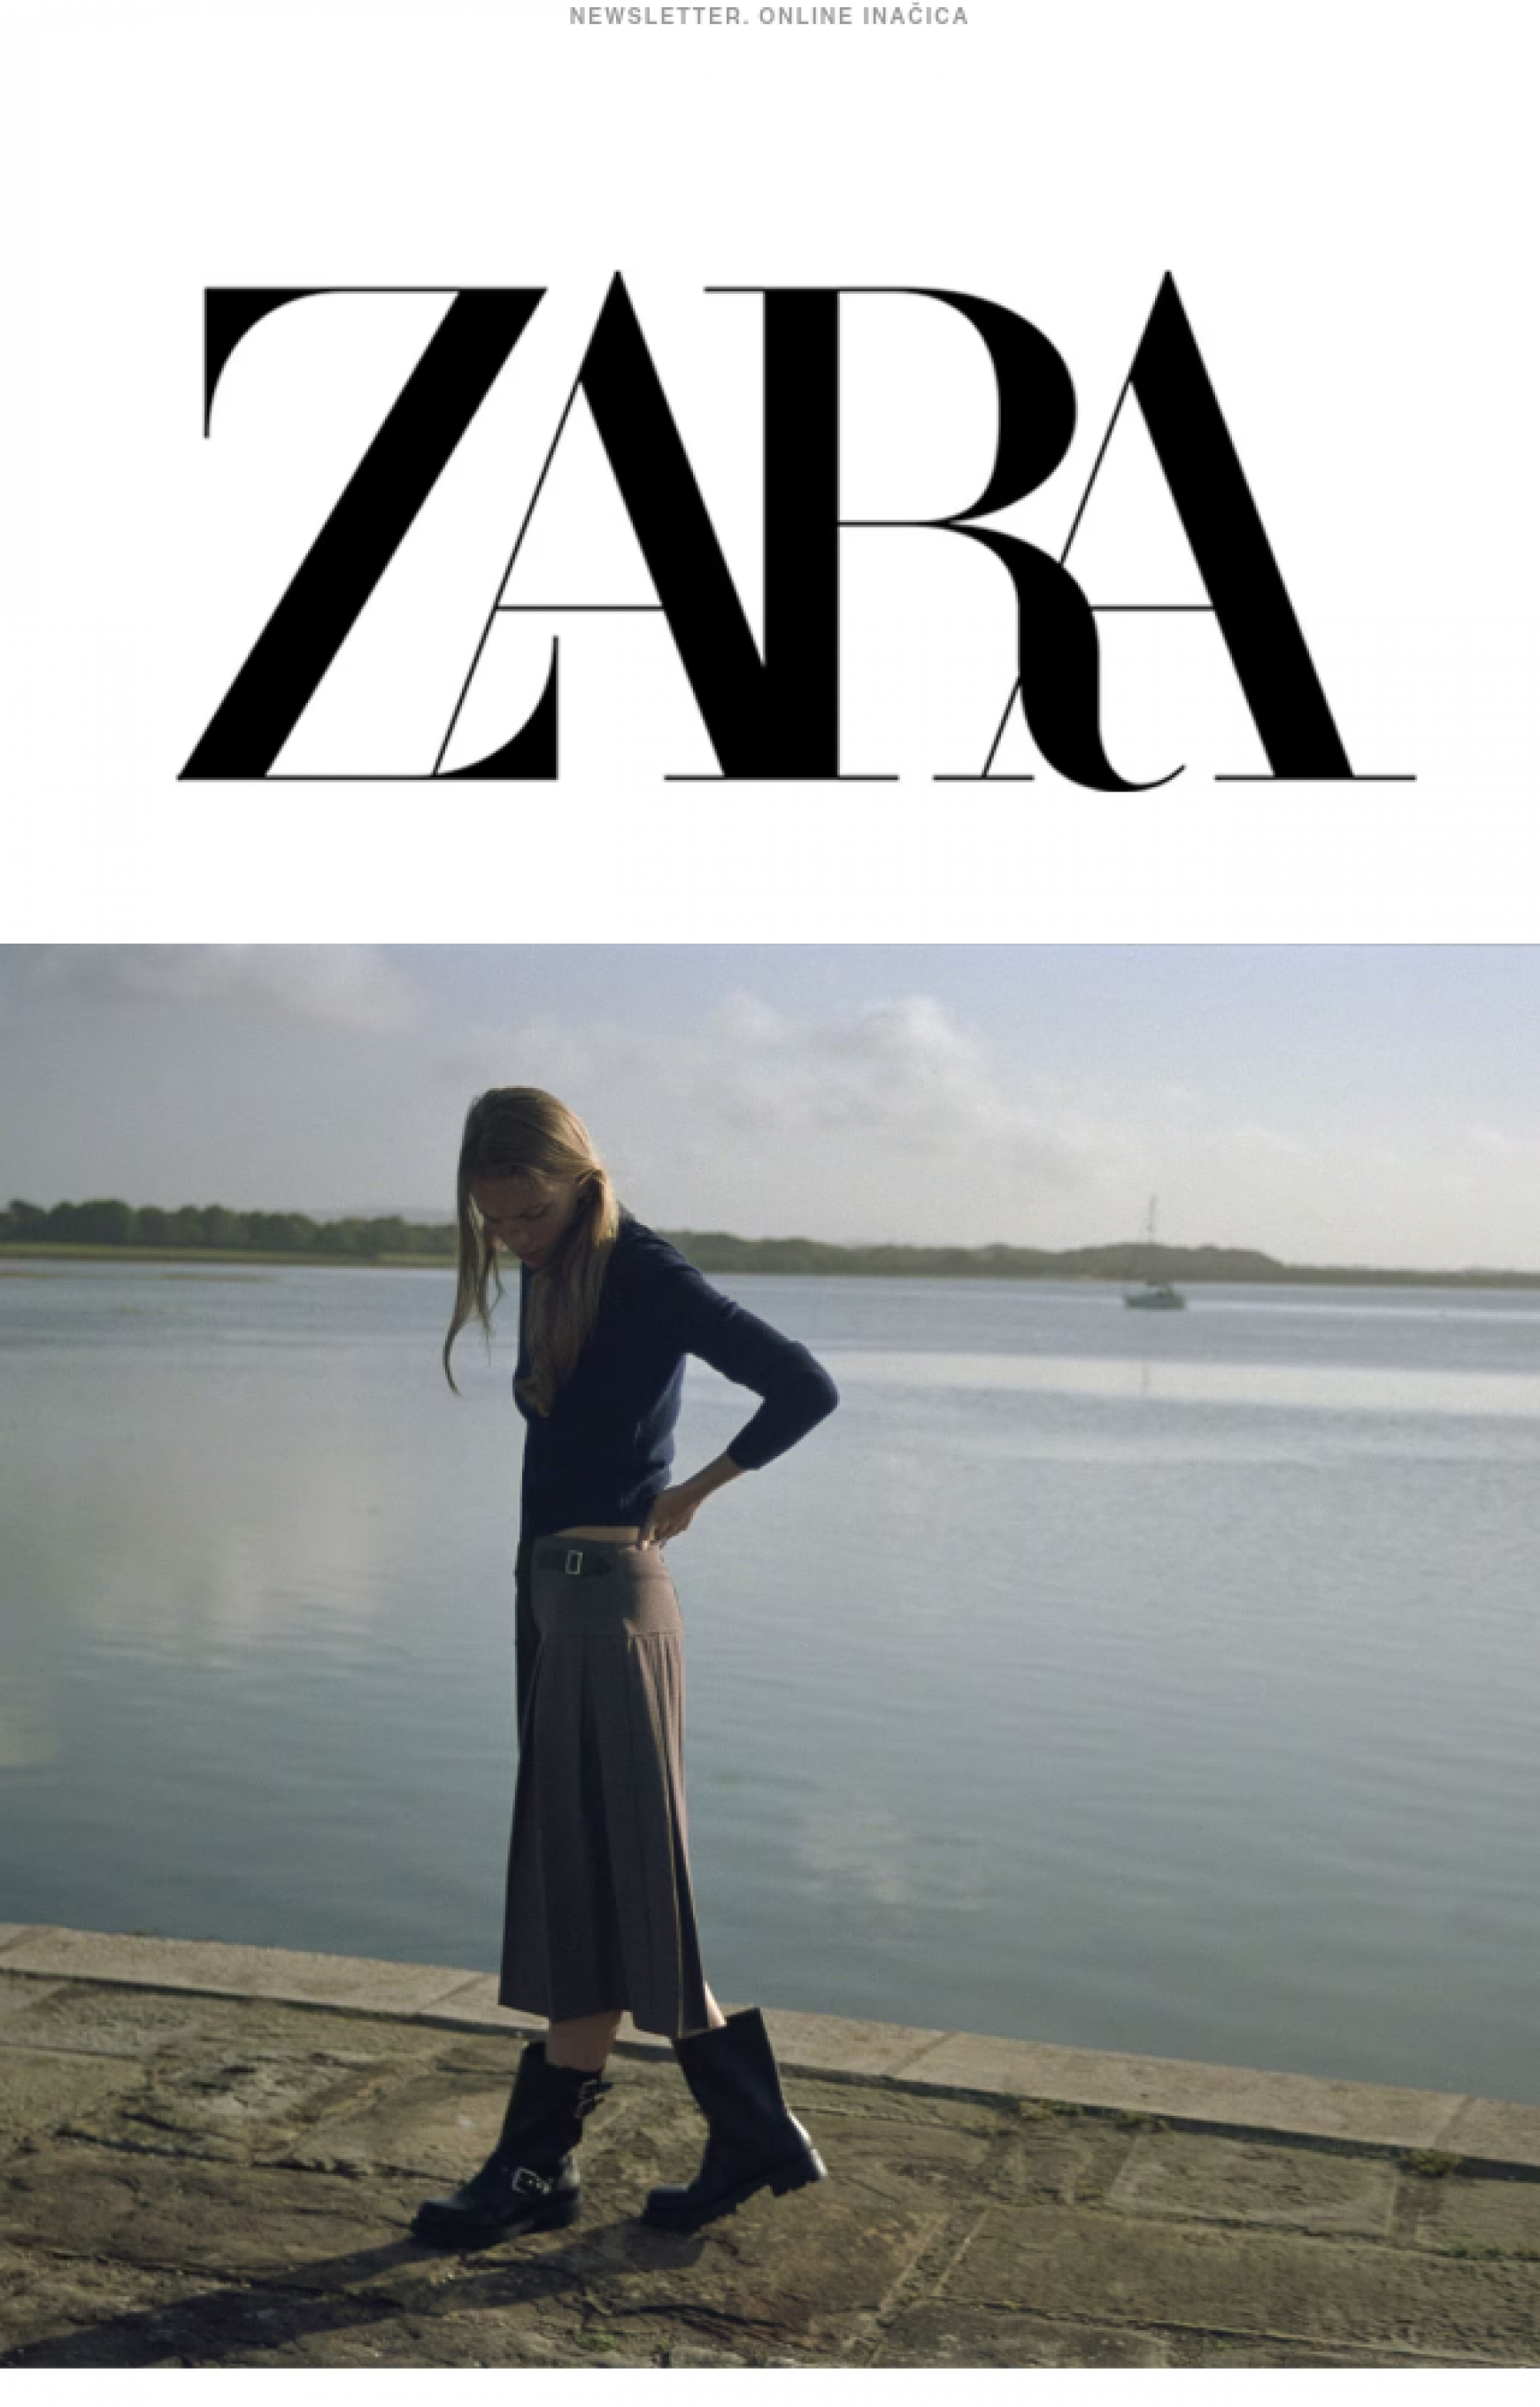 zara - ZARA - Discover what's new this week at #zarawoman